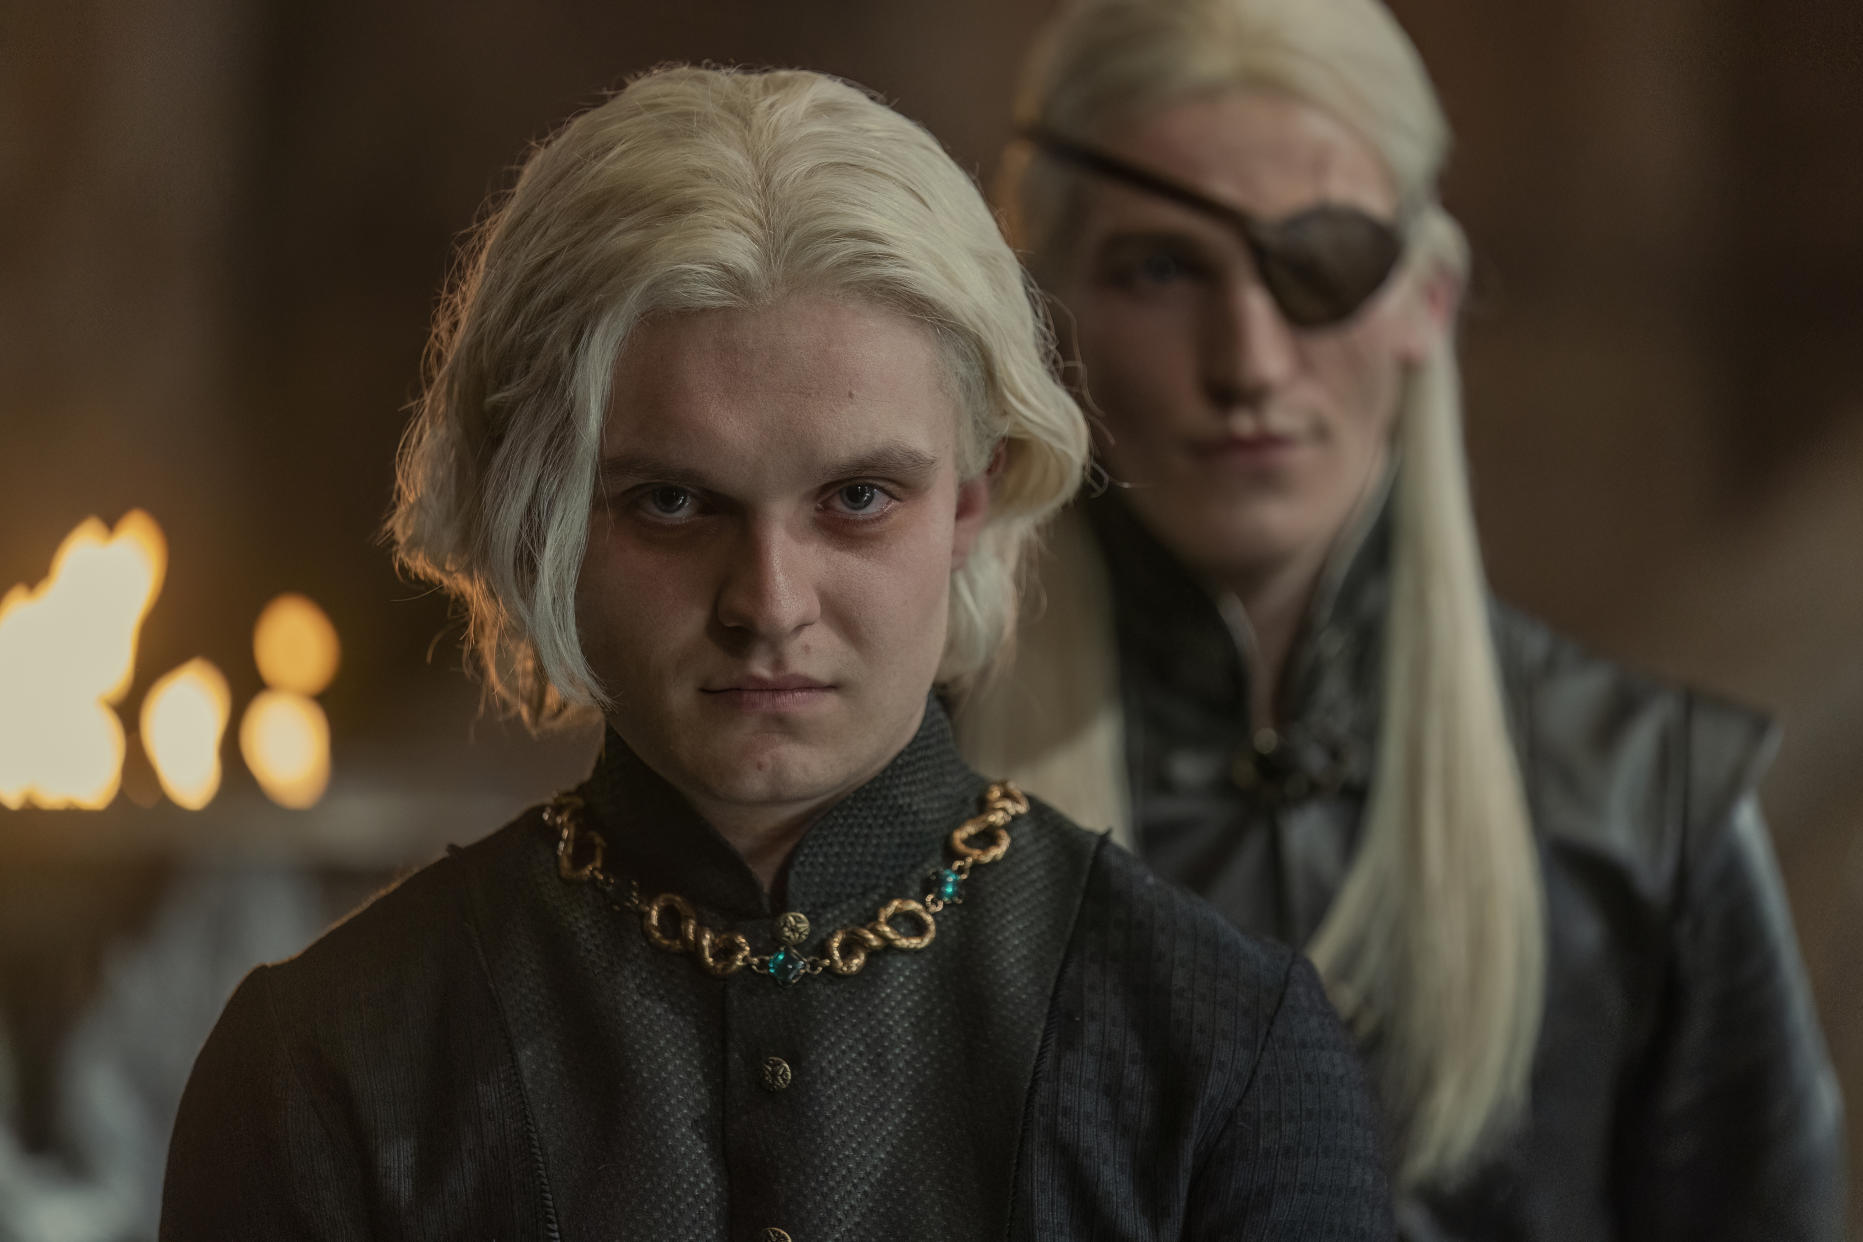 Tom Glynn-Carney as Prince Aegon Targaryen in House of the Dragon